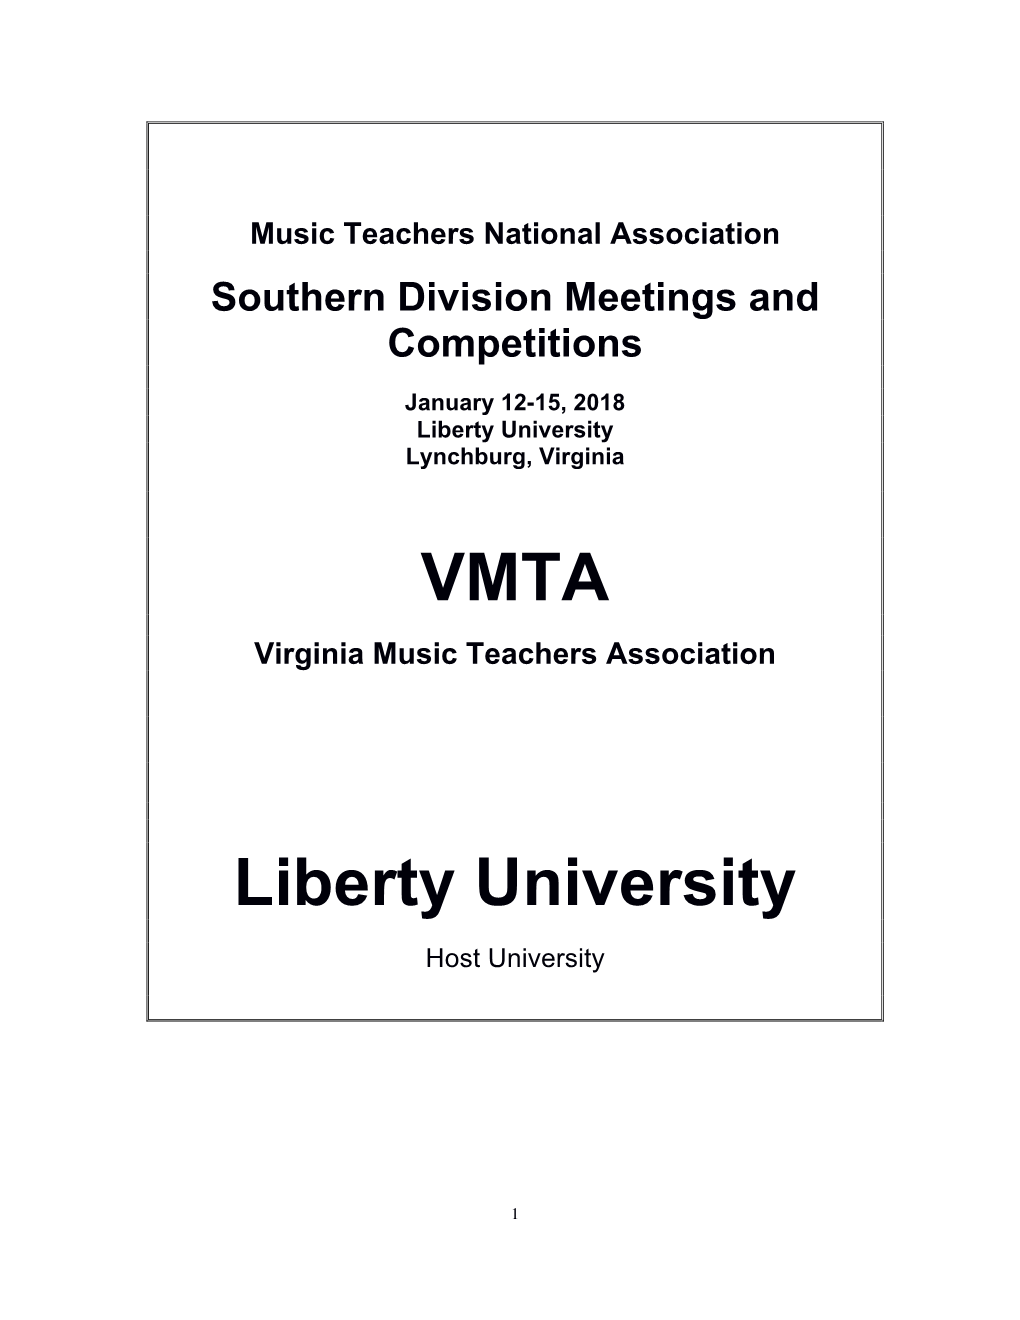 VMTA Liberty University